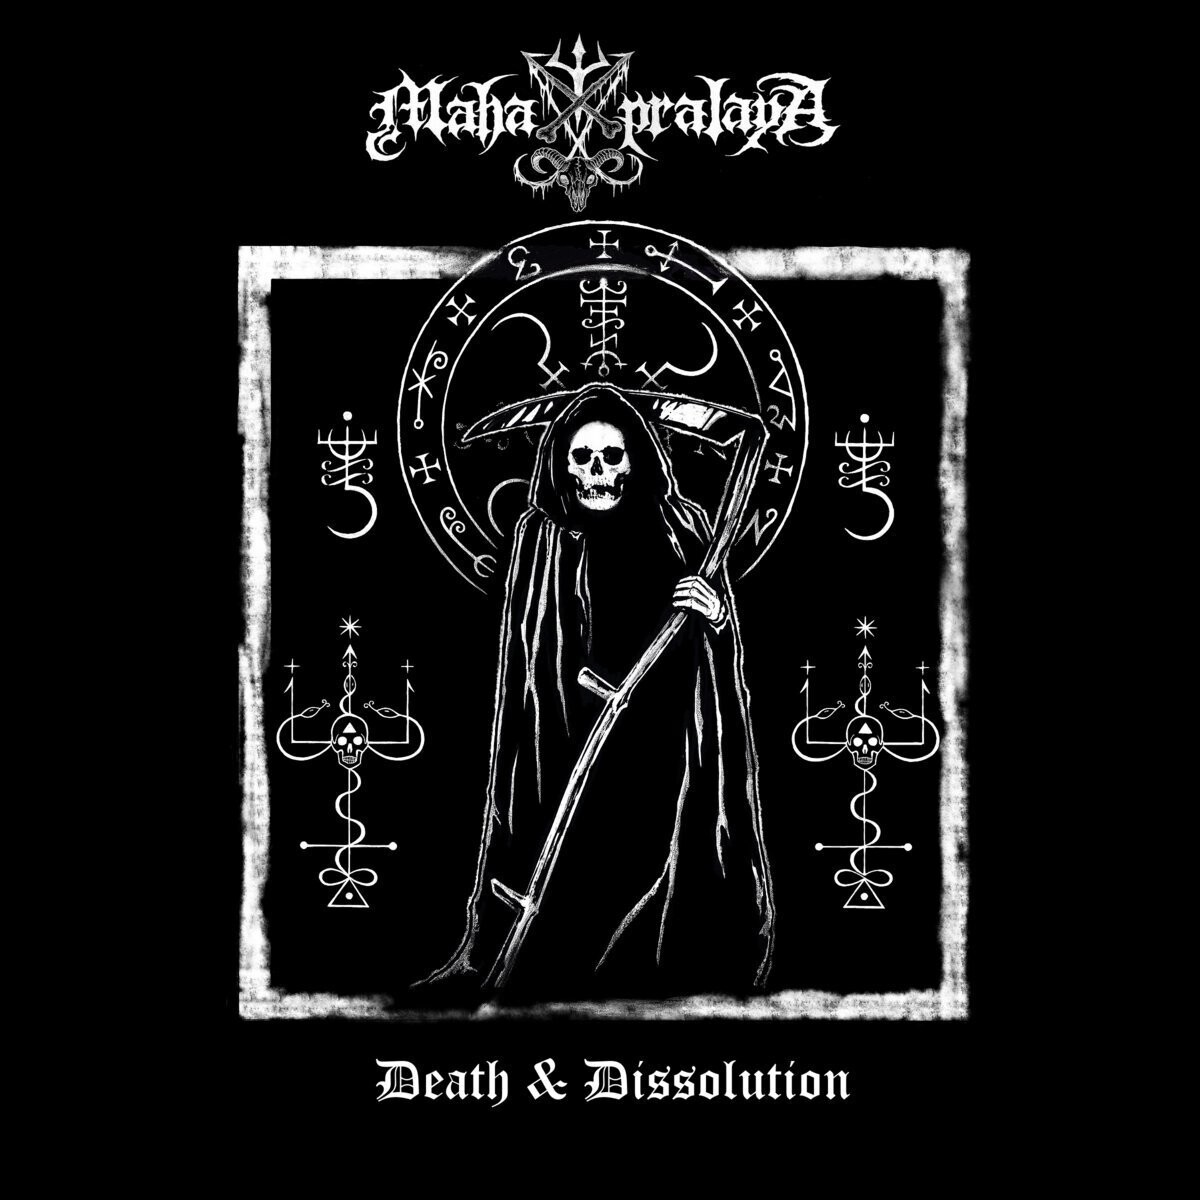 Maha Pralaya - Death & Dissolution | Blackened Death Metal CD